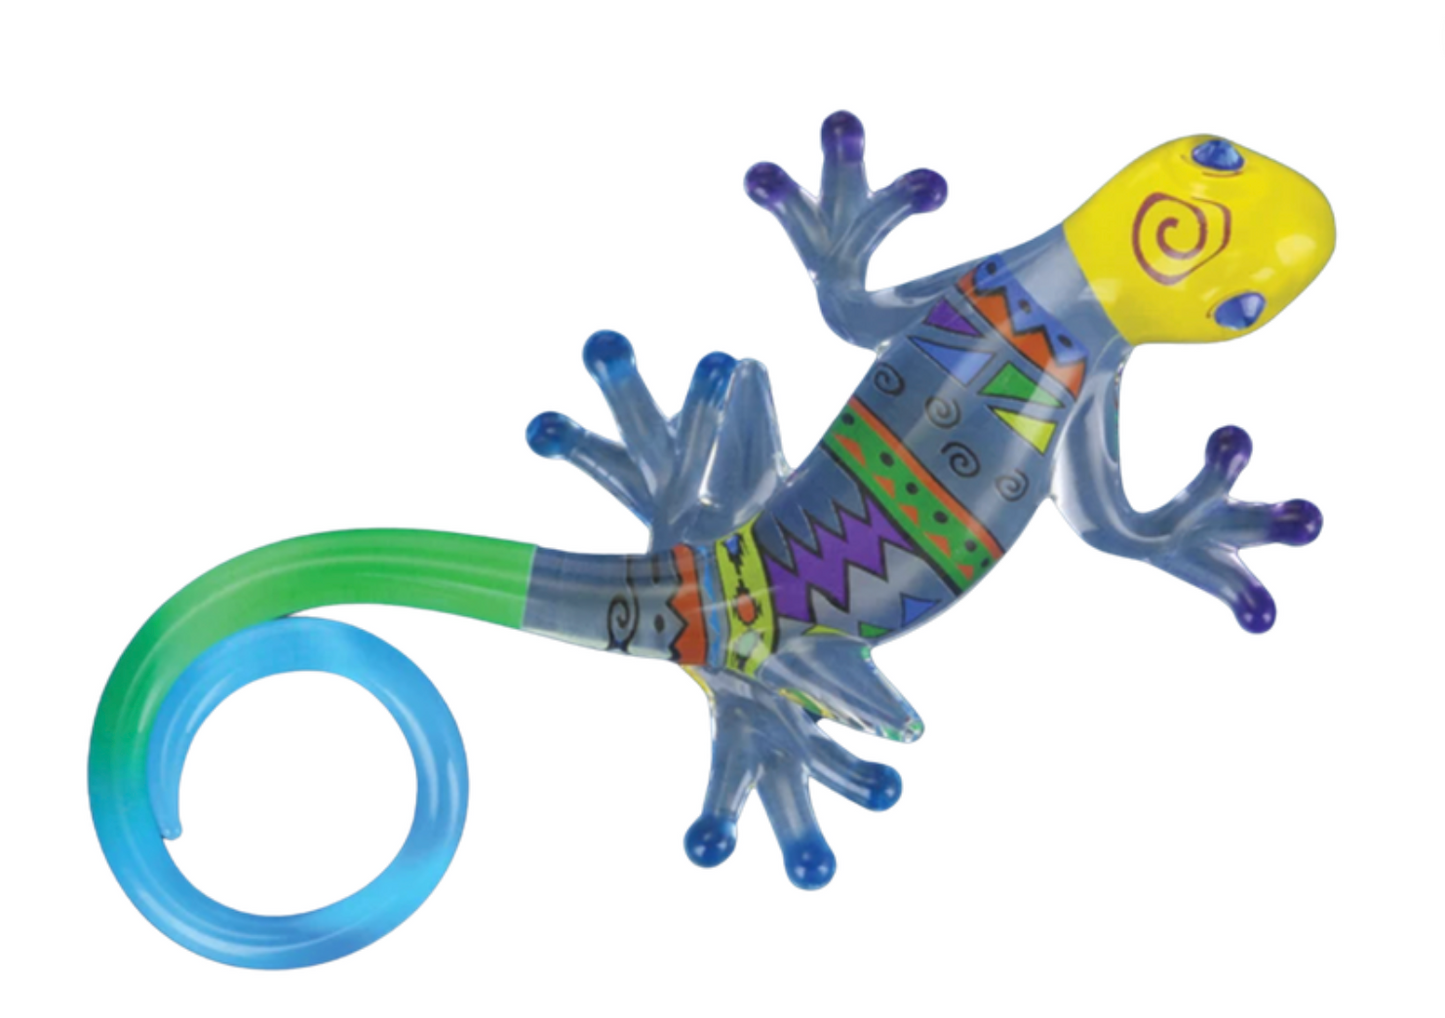 Glass Gecko Lizard Southwest Collectible Figurine